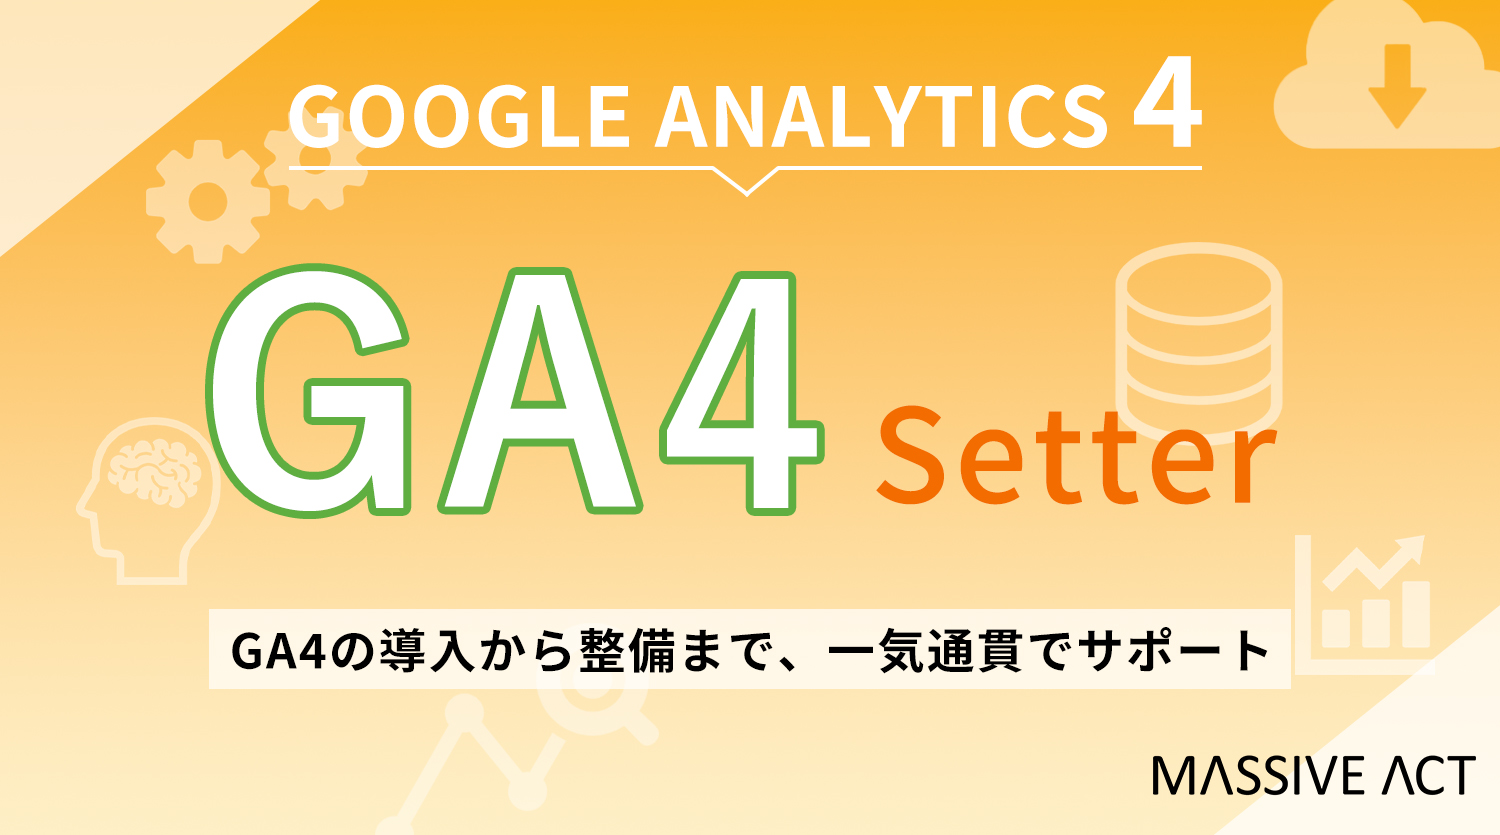 GA4導入-整備までワンストップ「GA4 Setter」